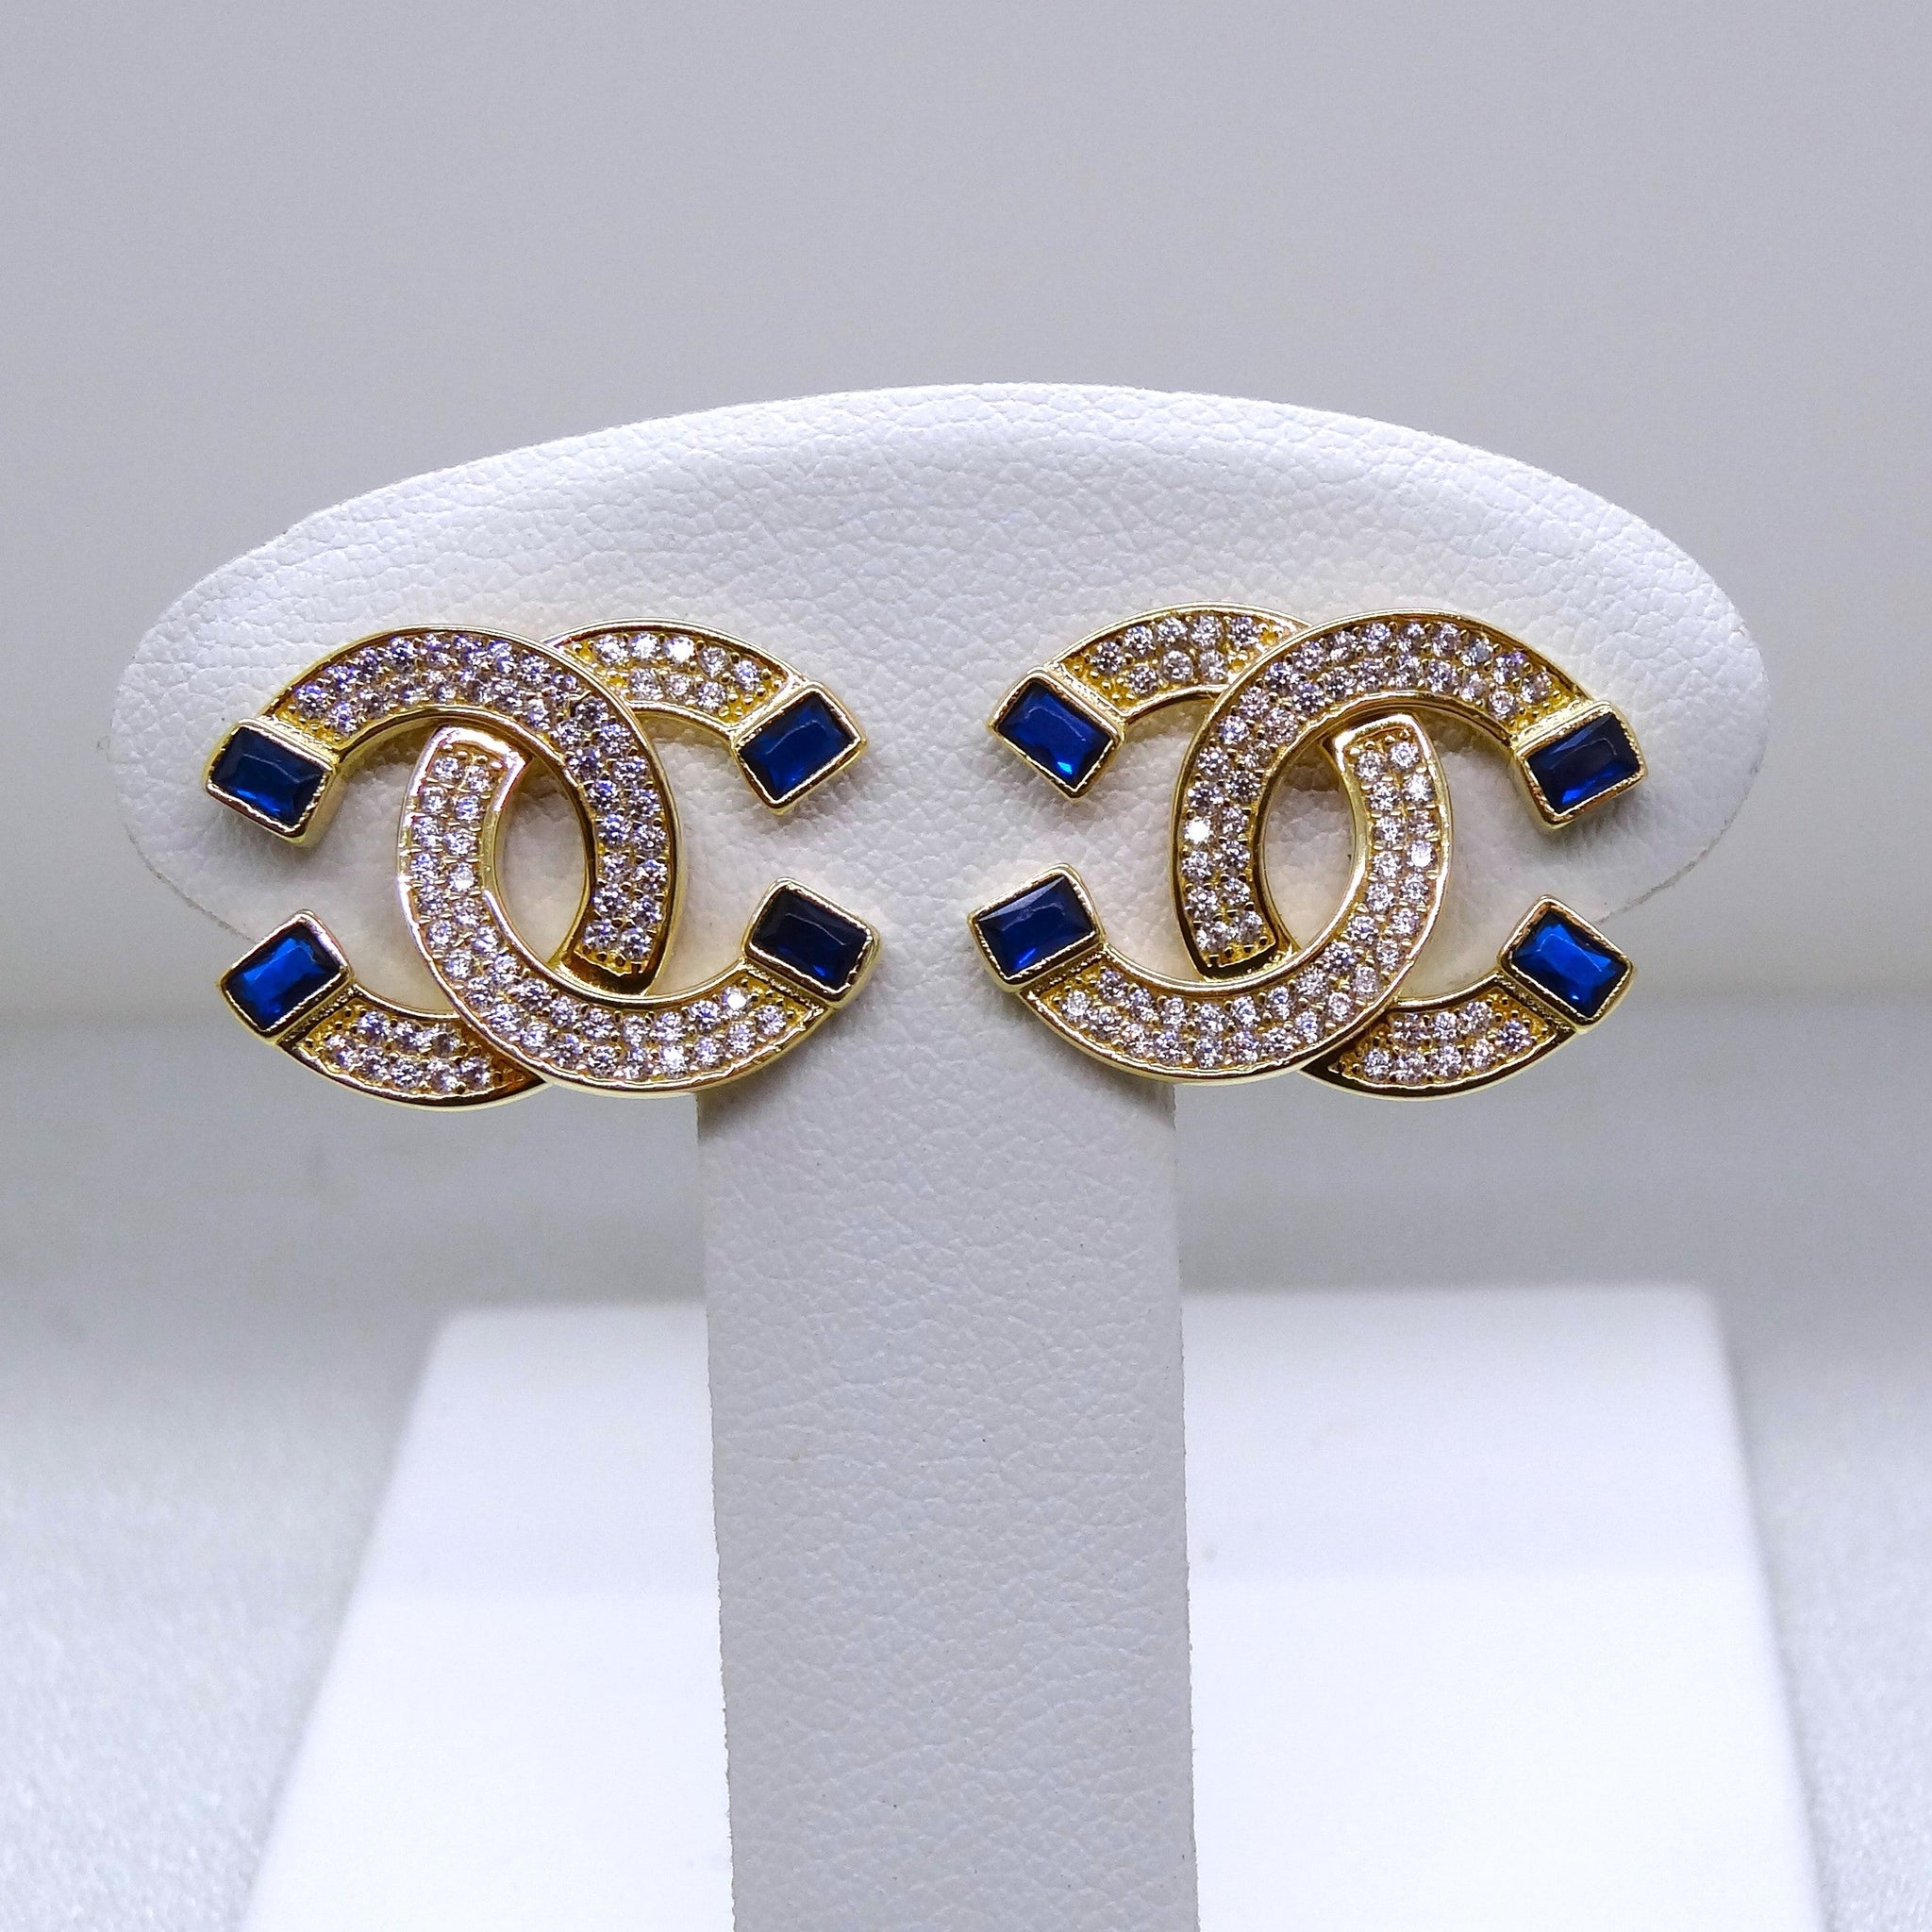 10kt. Yellow Gold Cubic Zirconia Blue Chanel Stud Earrings - Tello